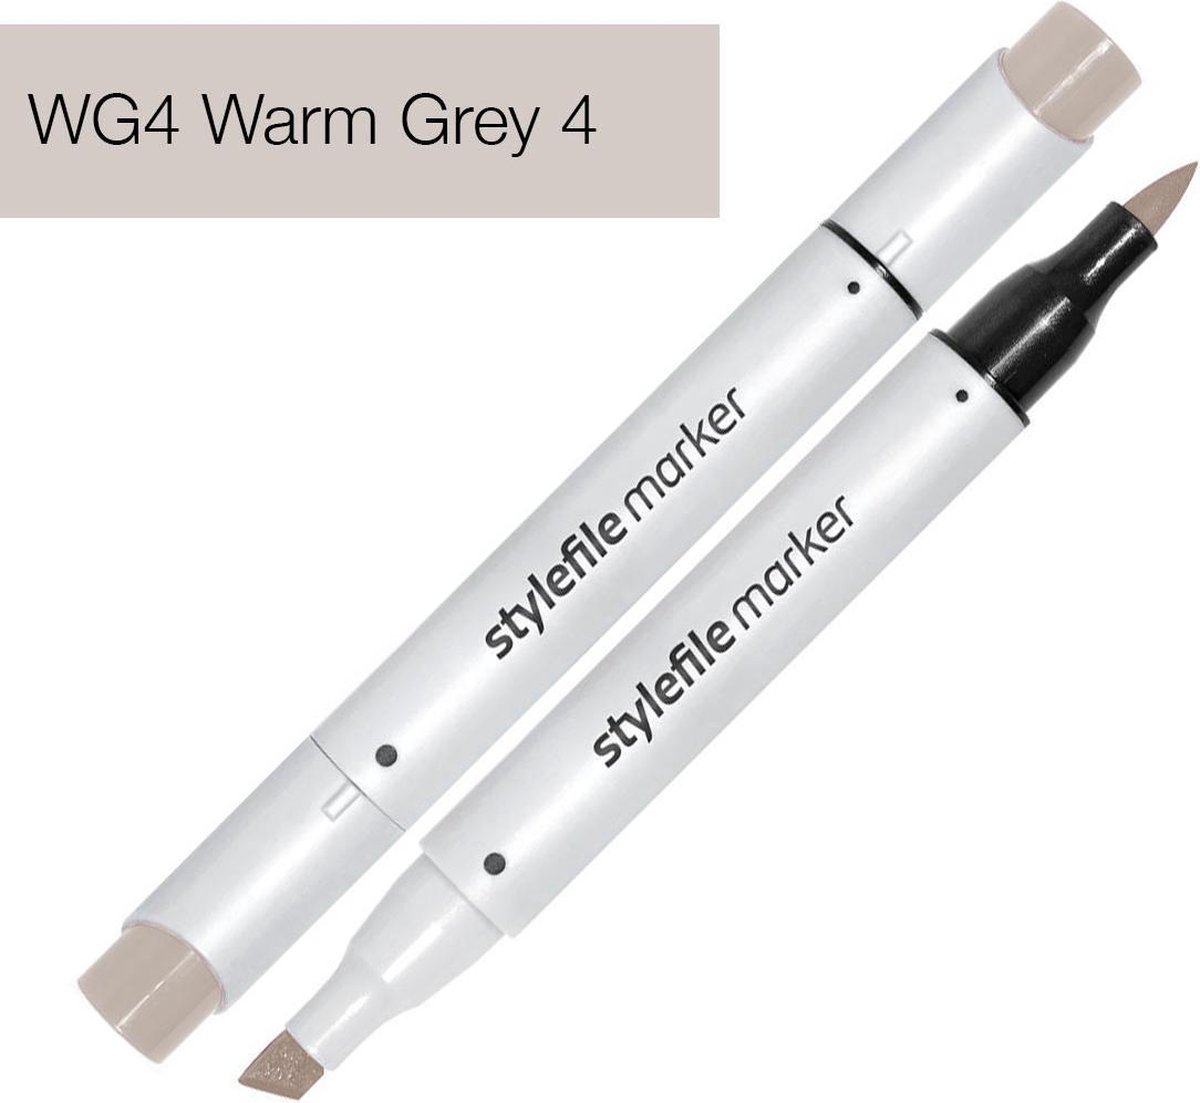 Stylefile Marker Brush - Warm Grey 4 - Hoge kwaliteit twin tip marker met brushpunt